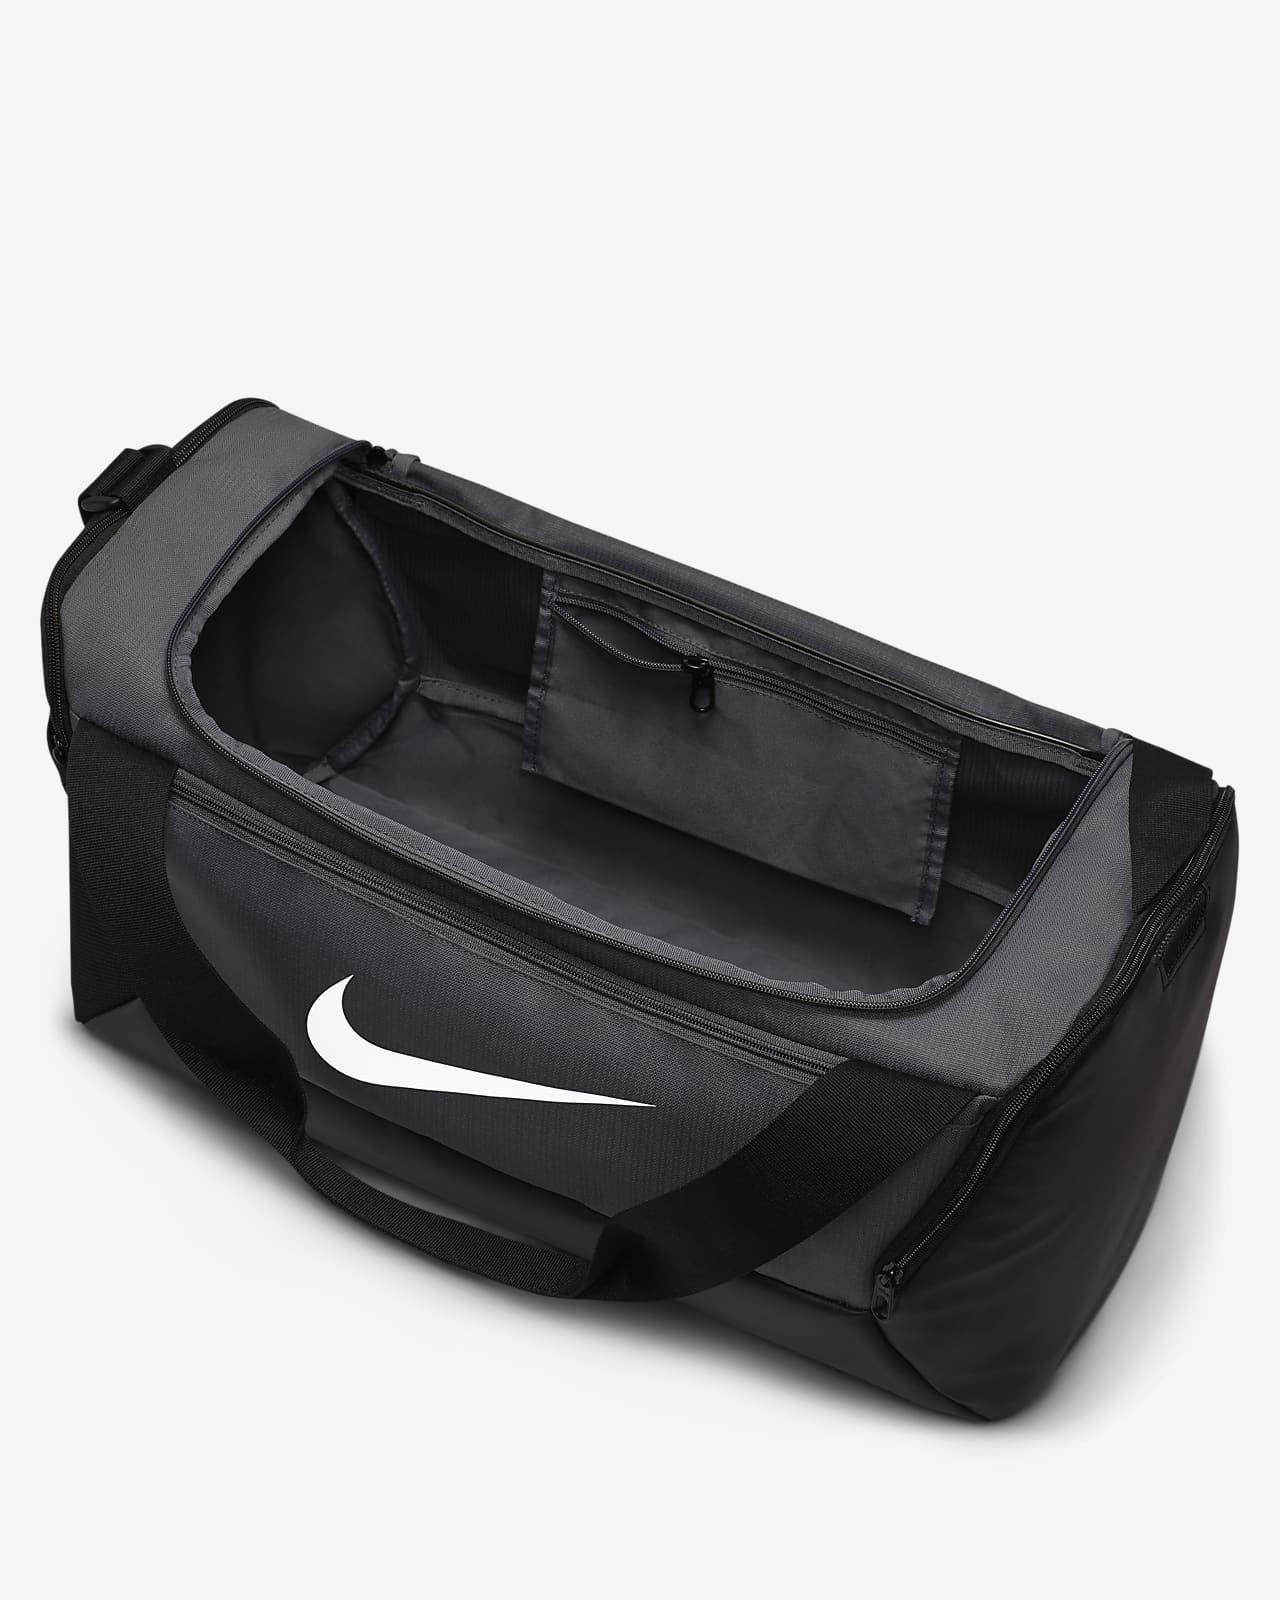 Nike Brasilia Small Duffle Bag In Grey BA4831-074